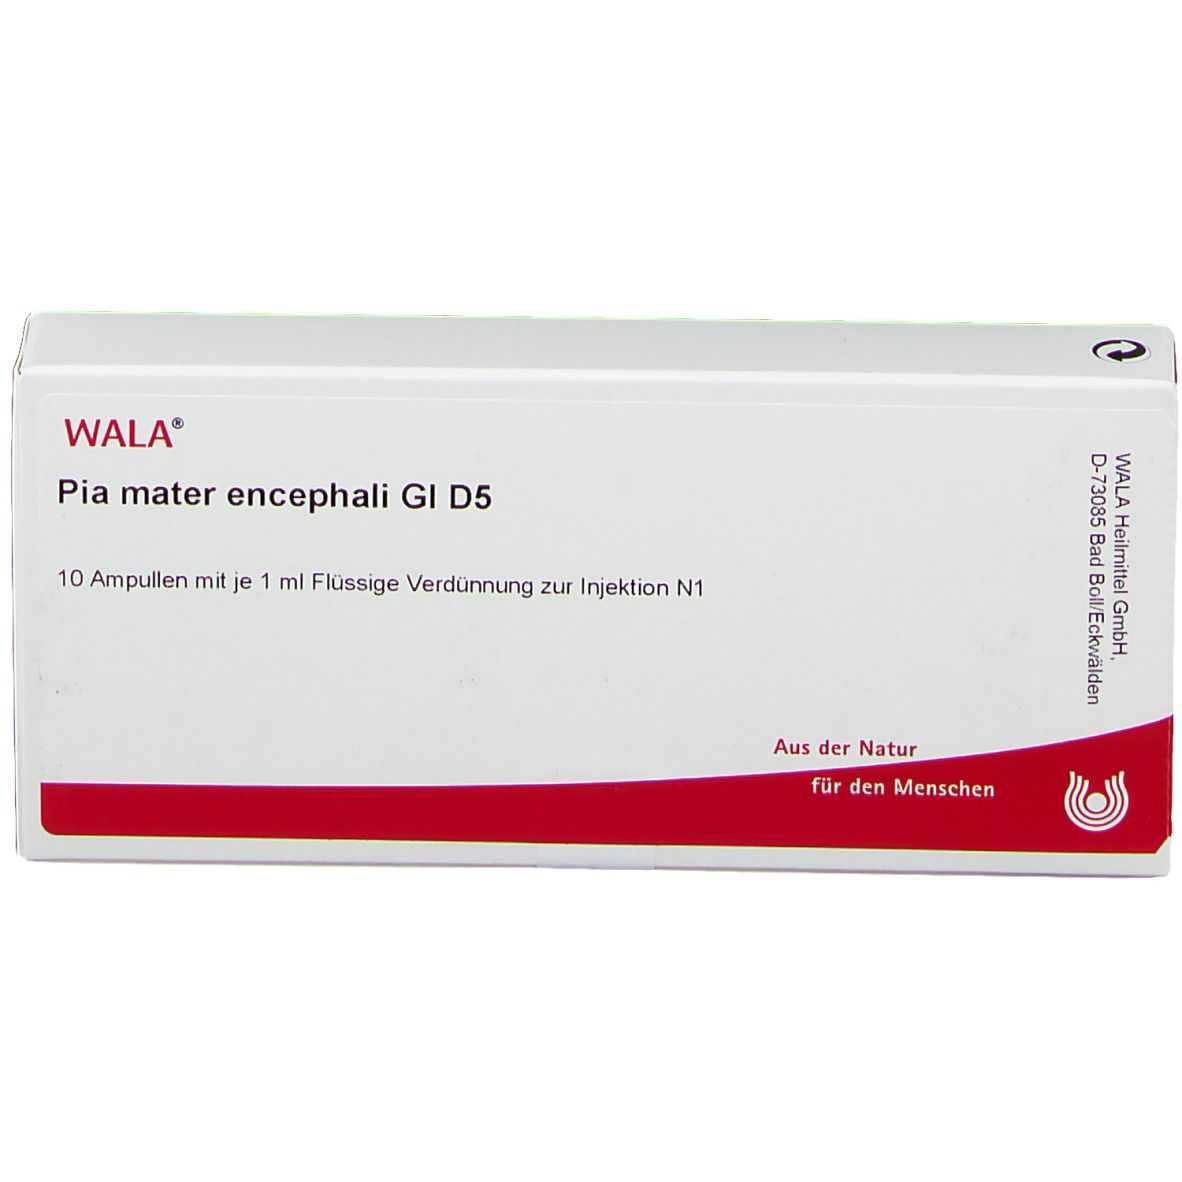 WALA® Pia mater encephali Gl D 5